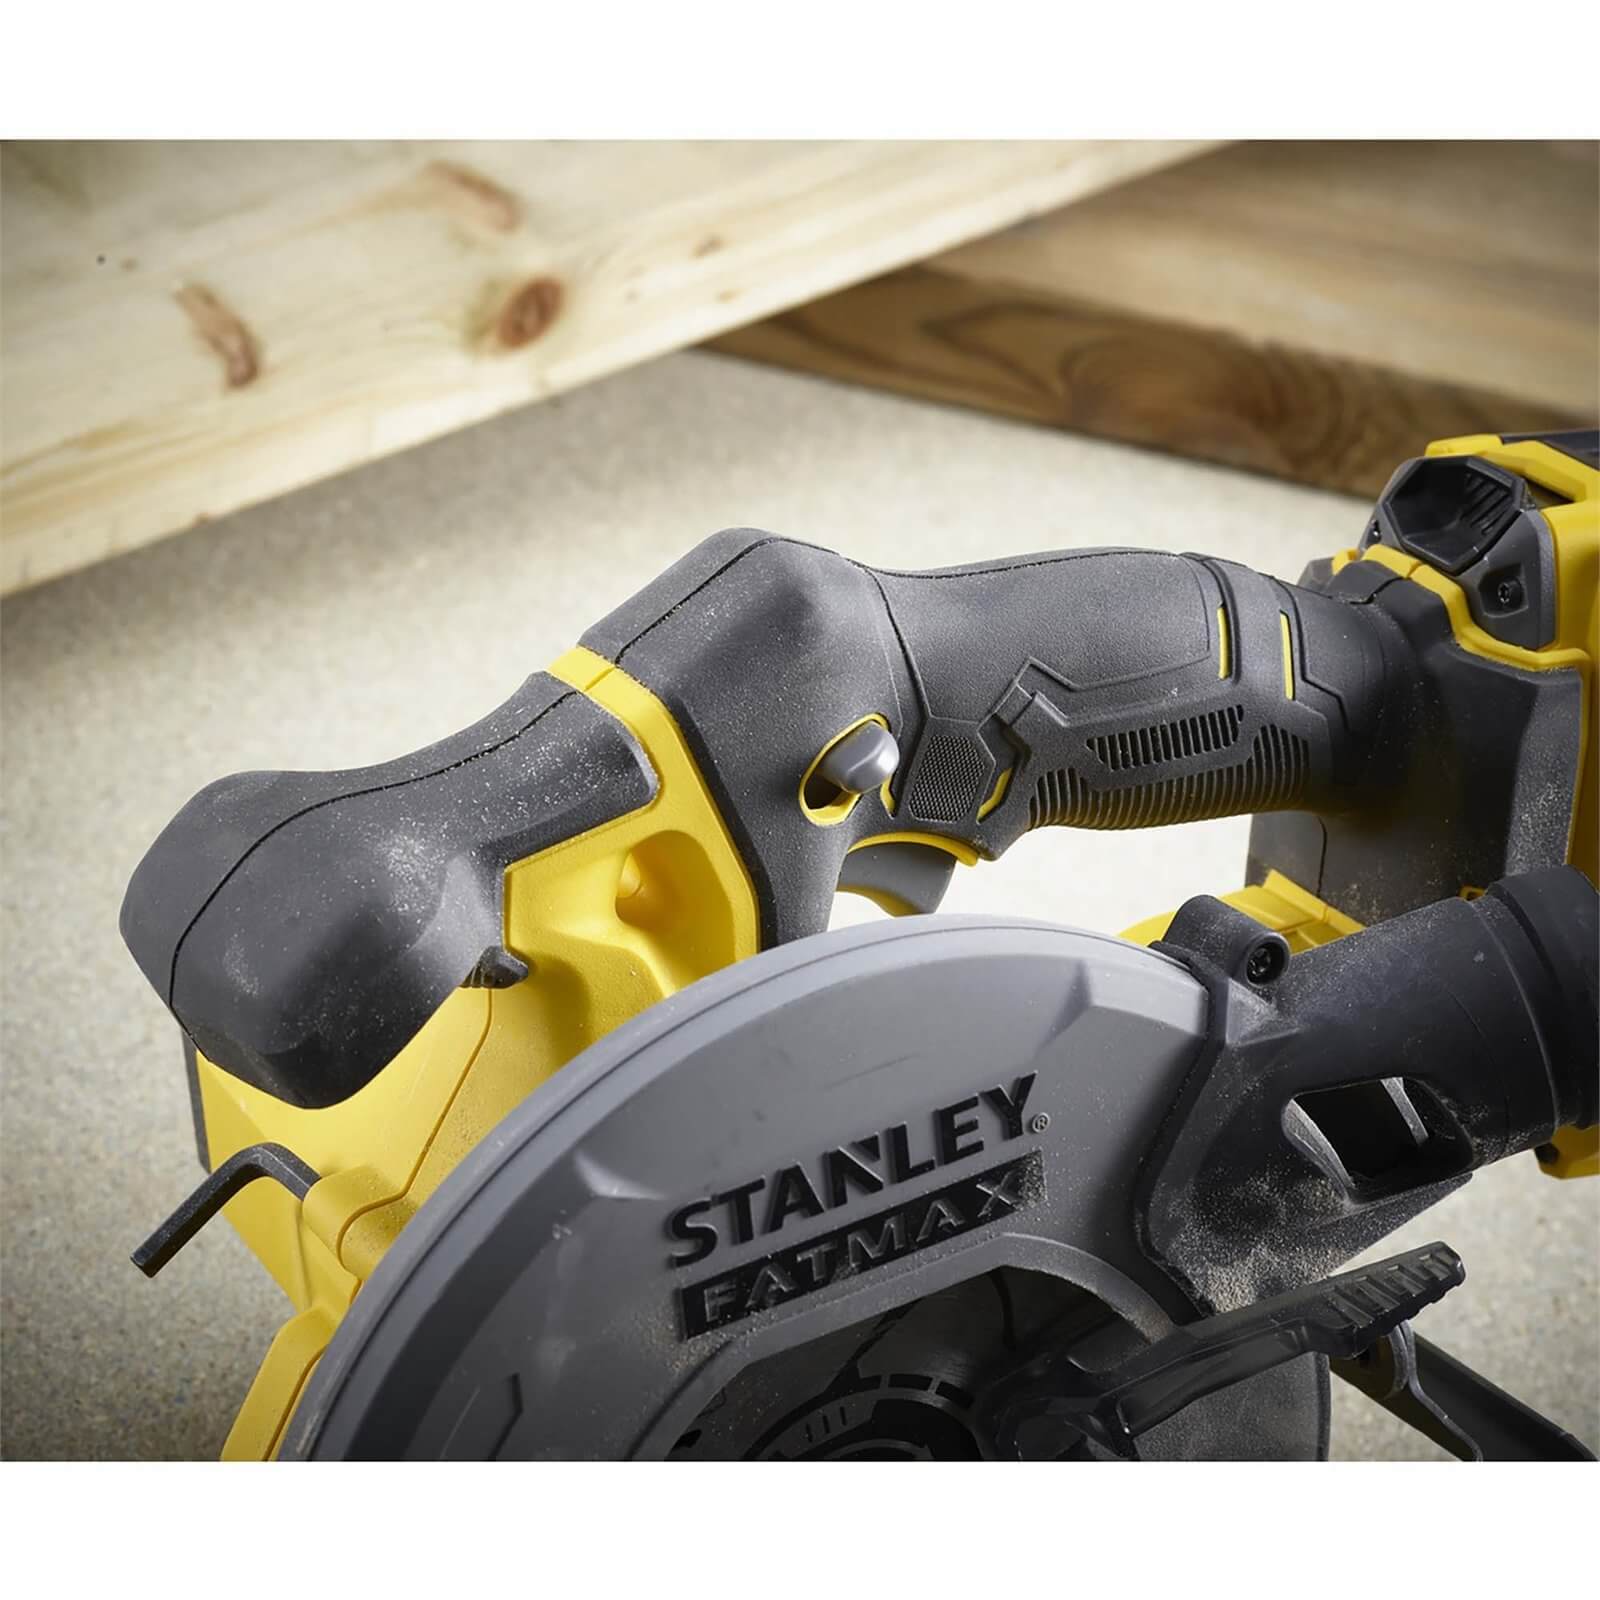 STANLEY FATMAX V20 18V Cordless Circular Saw with Kit Box (SFMCS500D1K-GB)